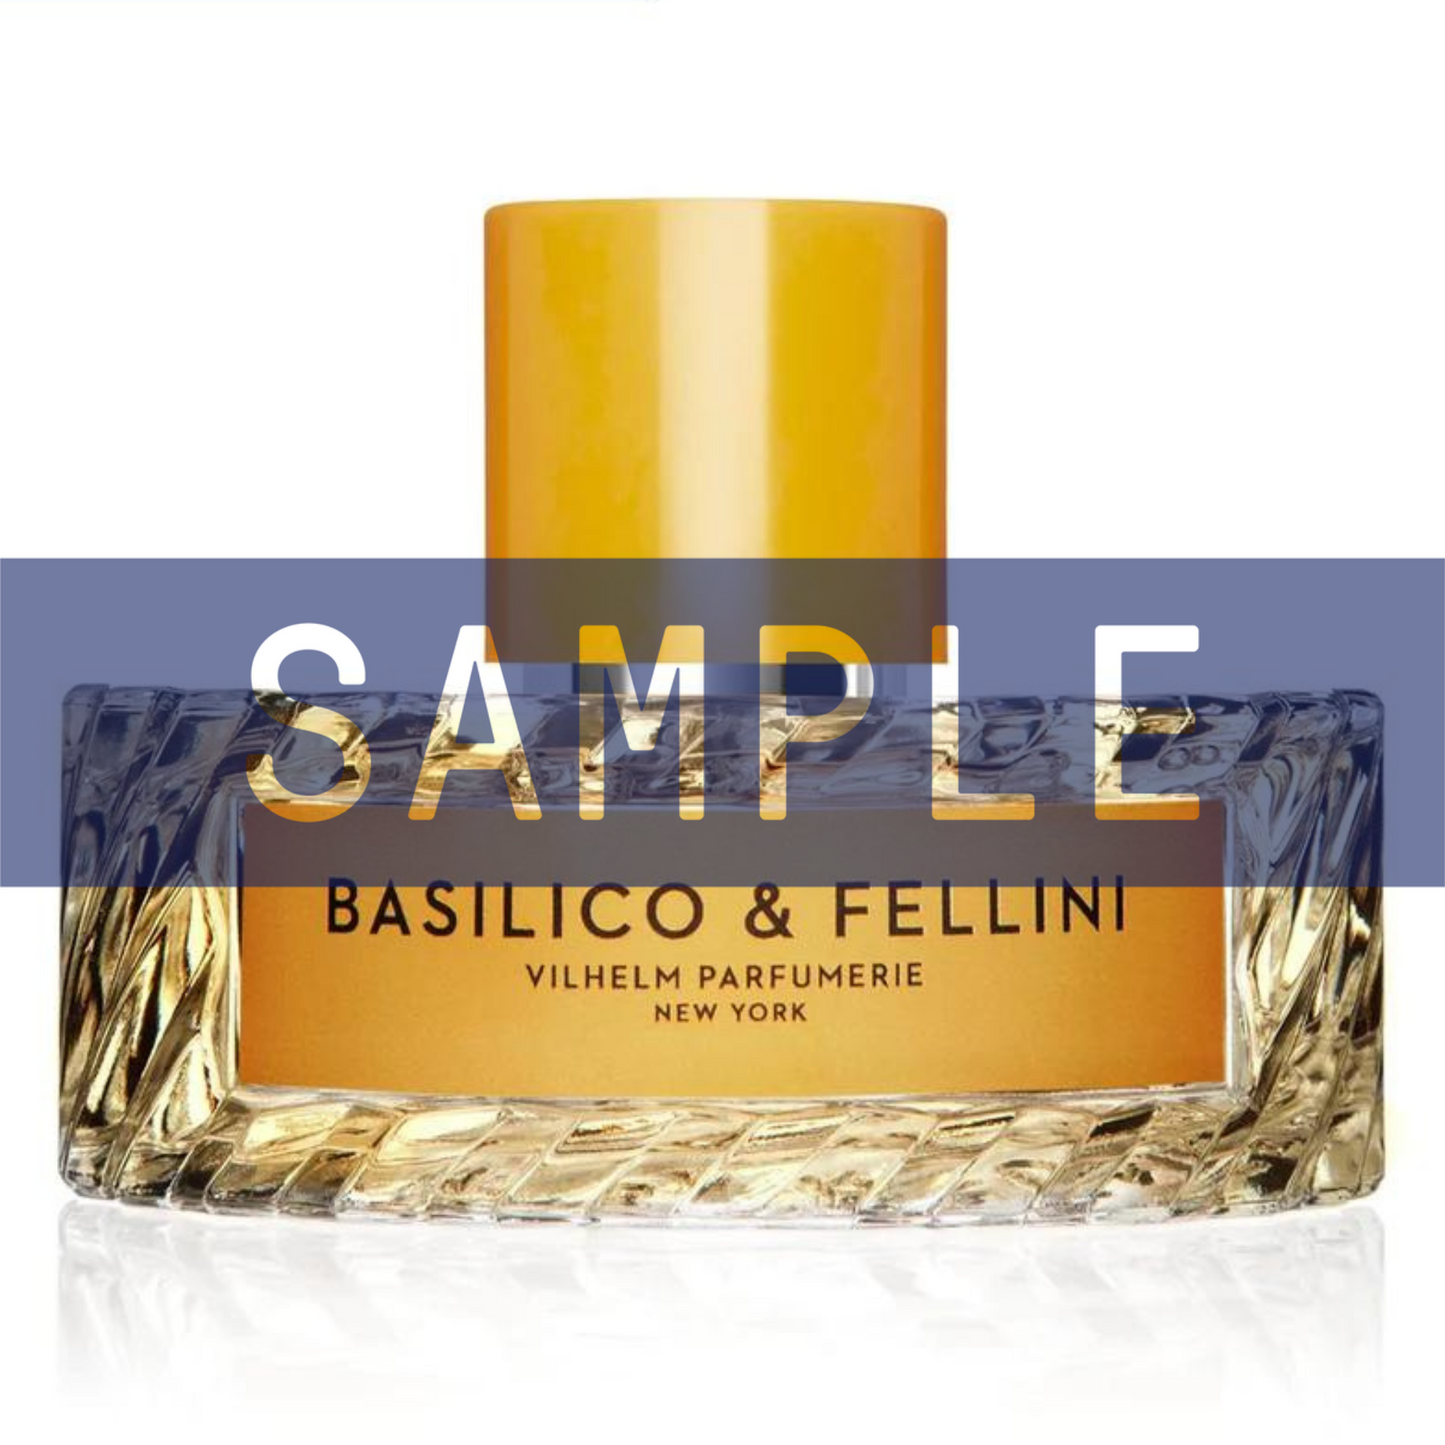 Primary Image of Sample - Basilico + Fellini